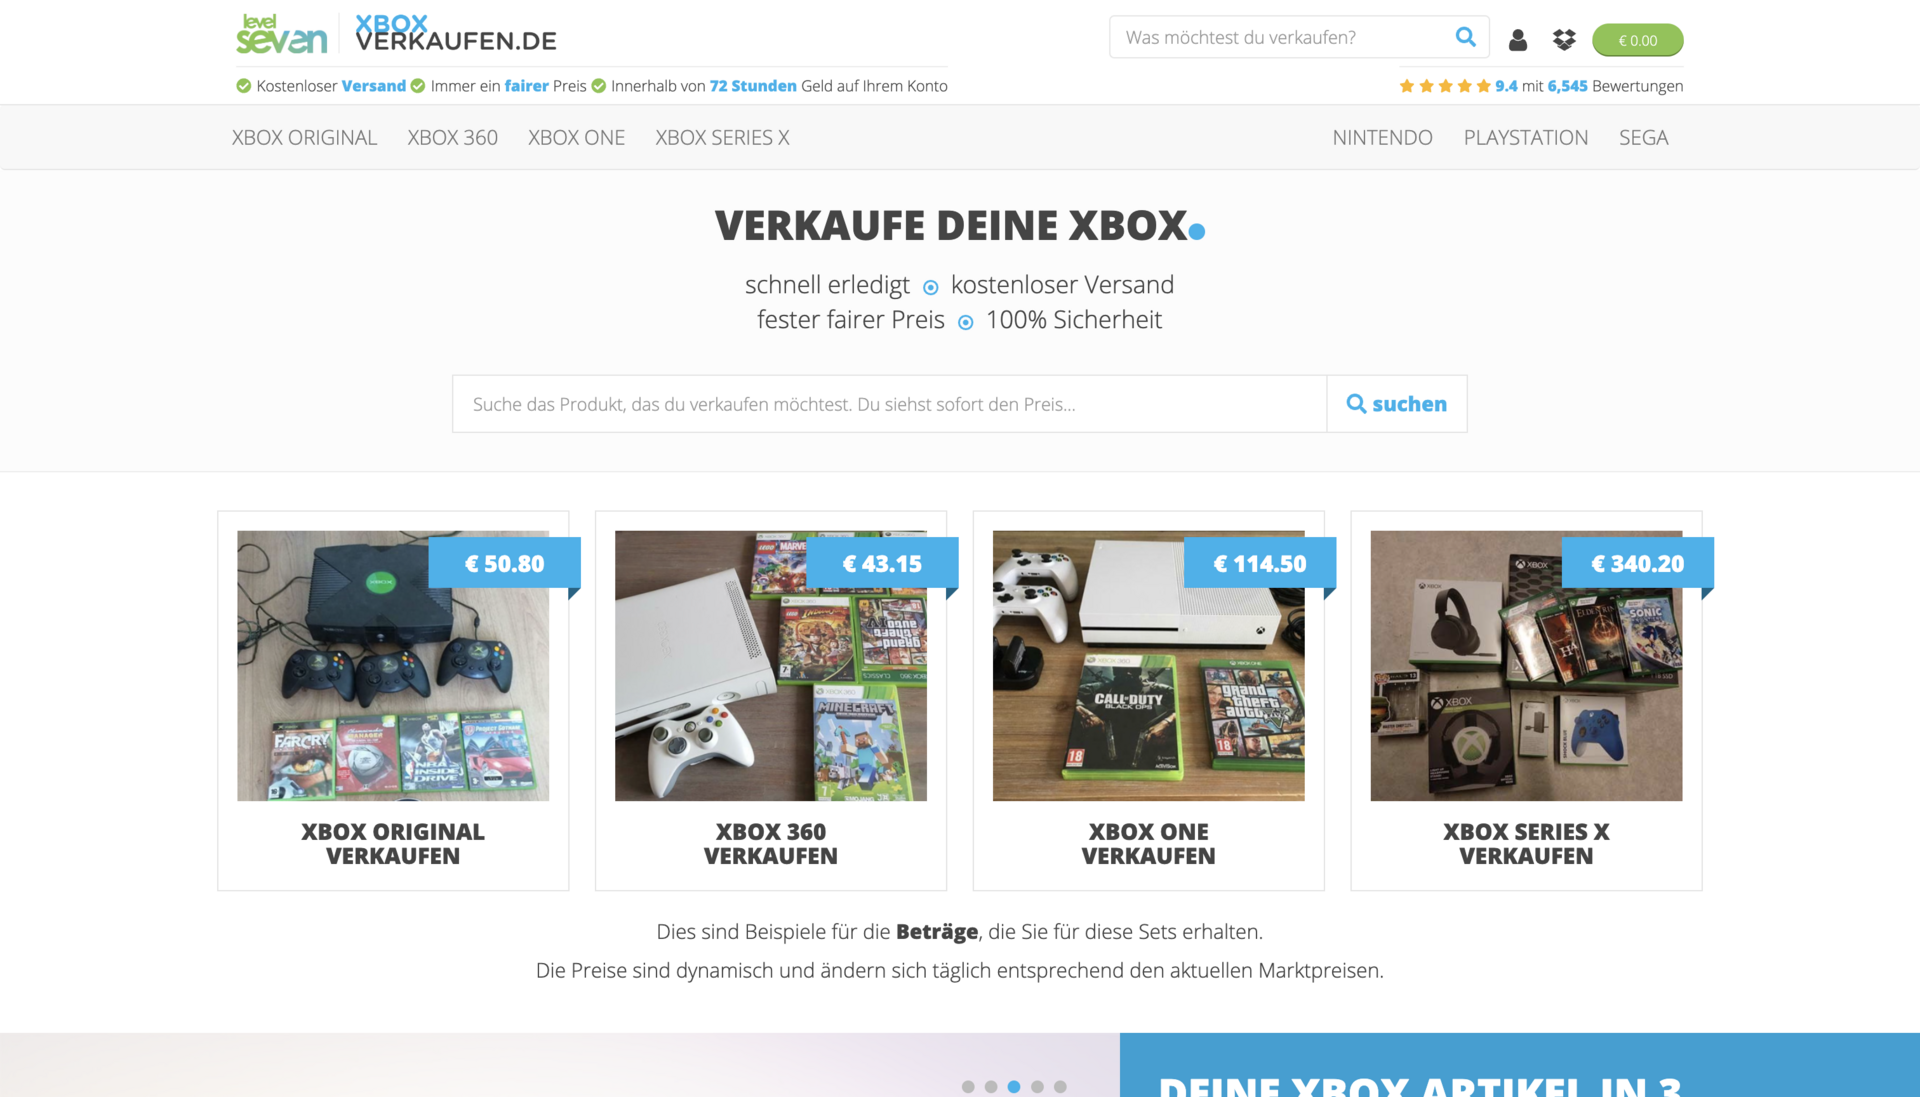 XboxVerkaufen.de